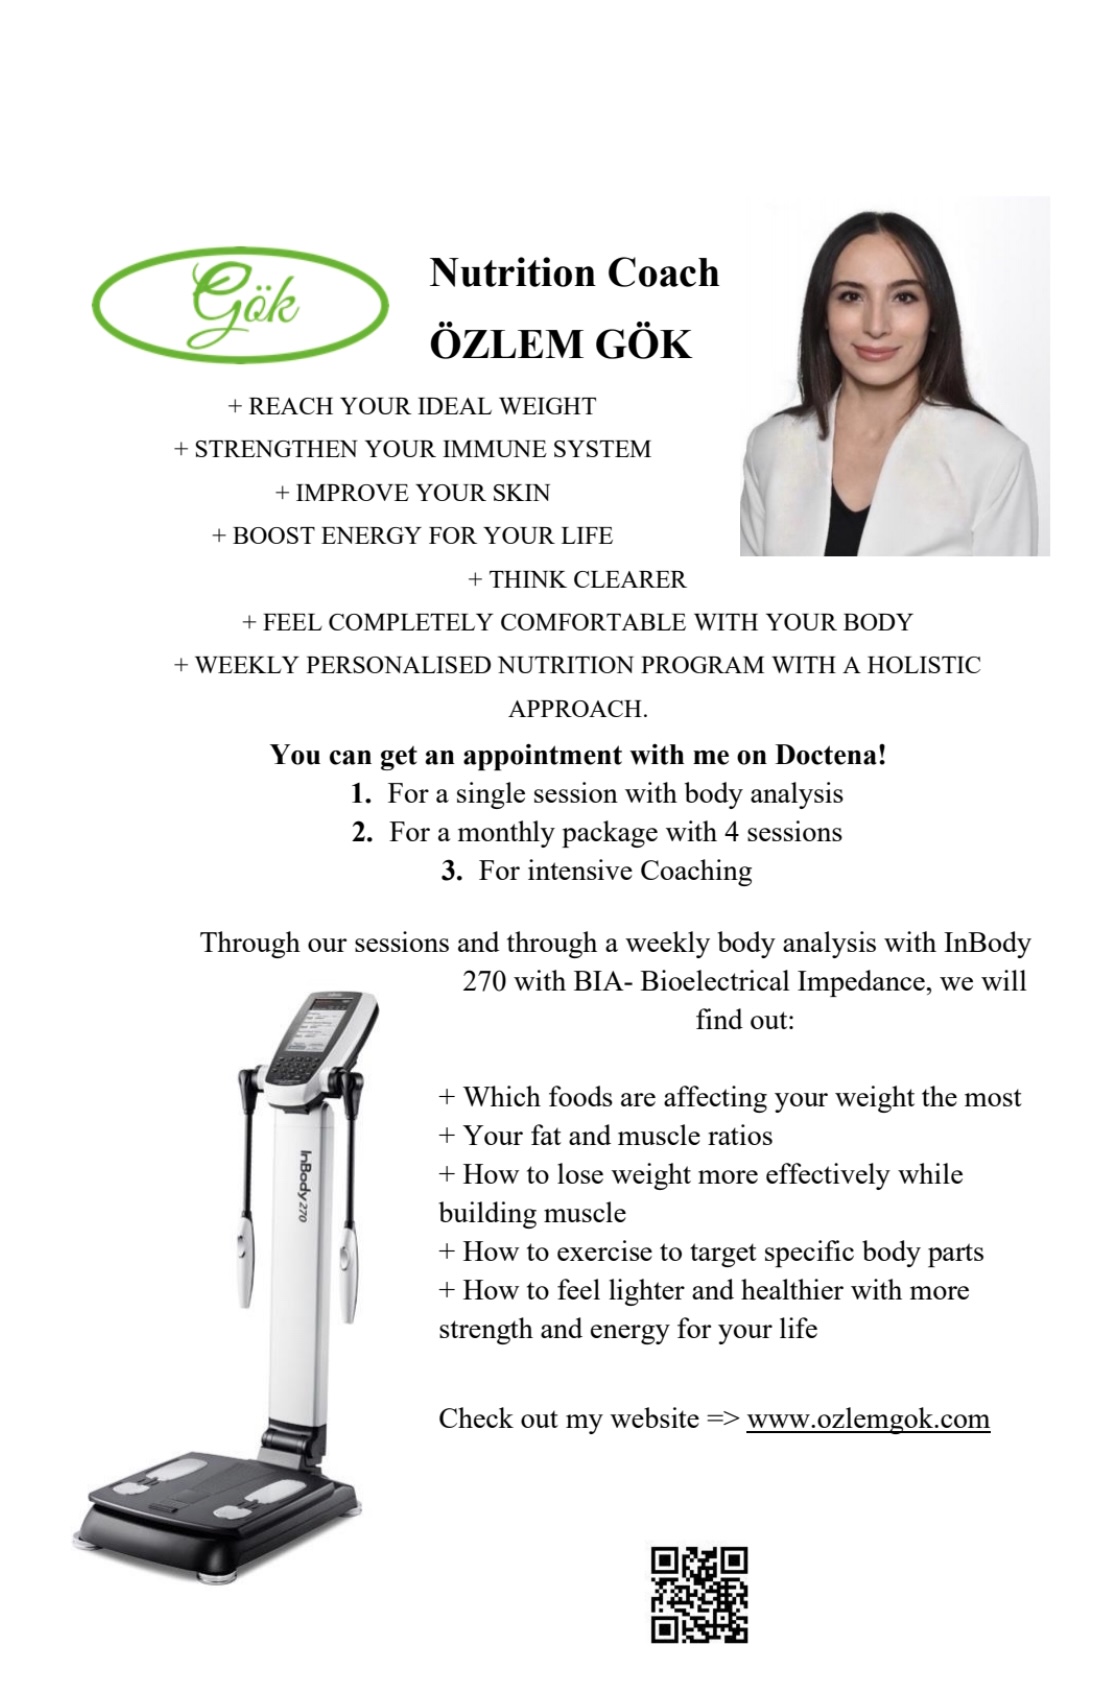 Özlem Gök Certificated Nutritionist and Nutrition Coach